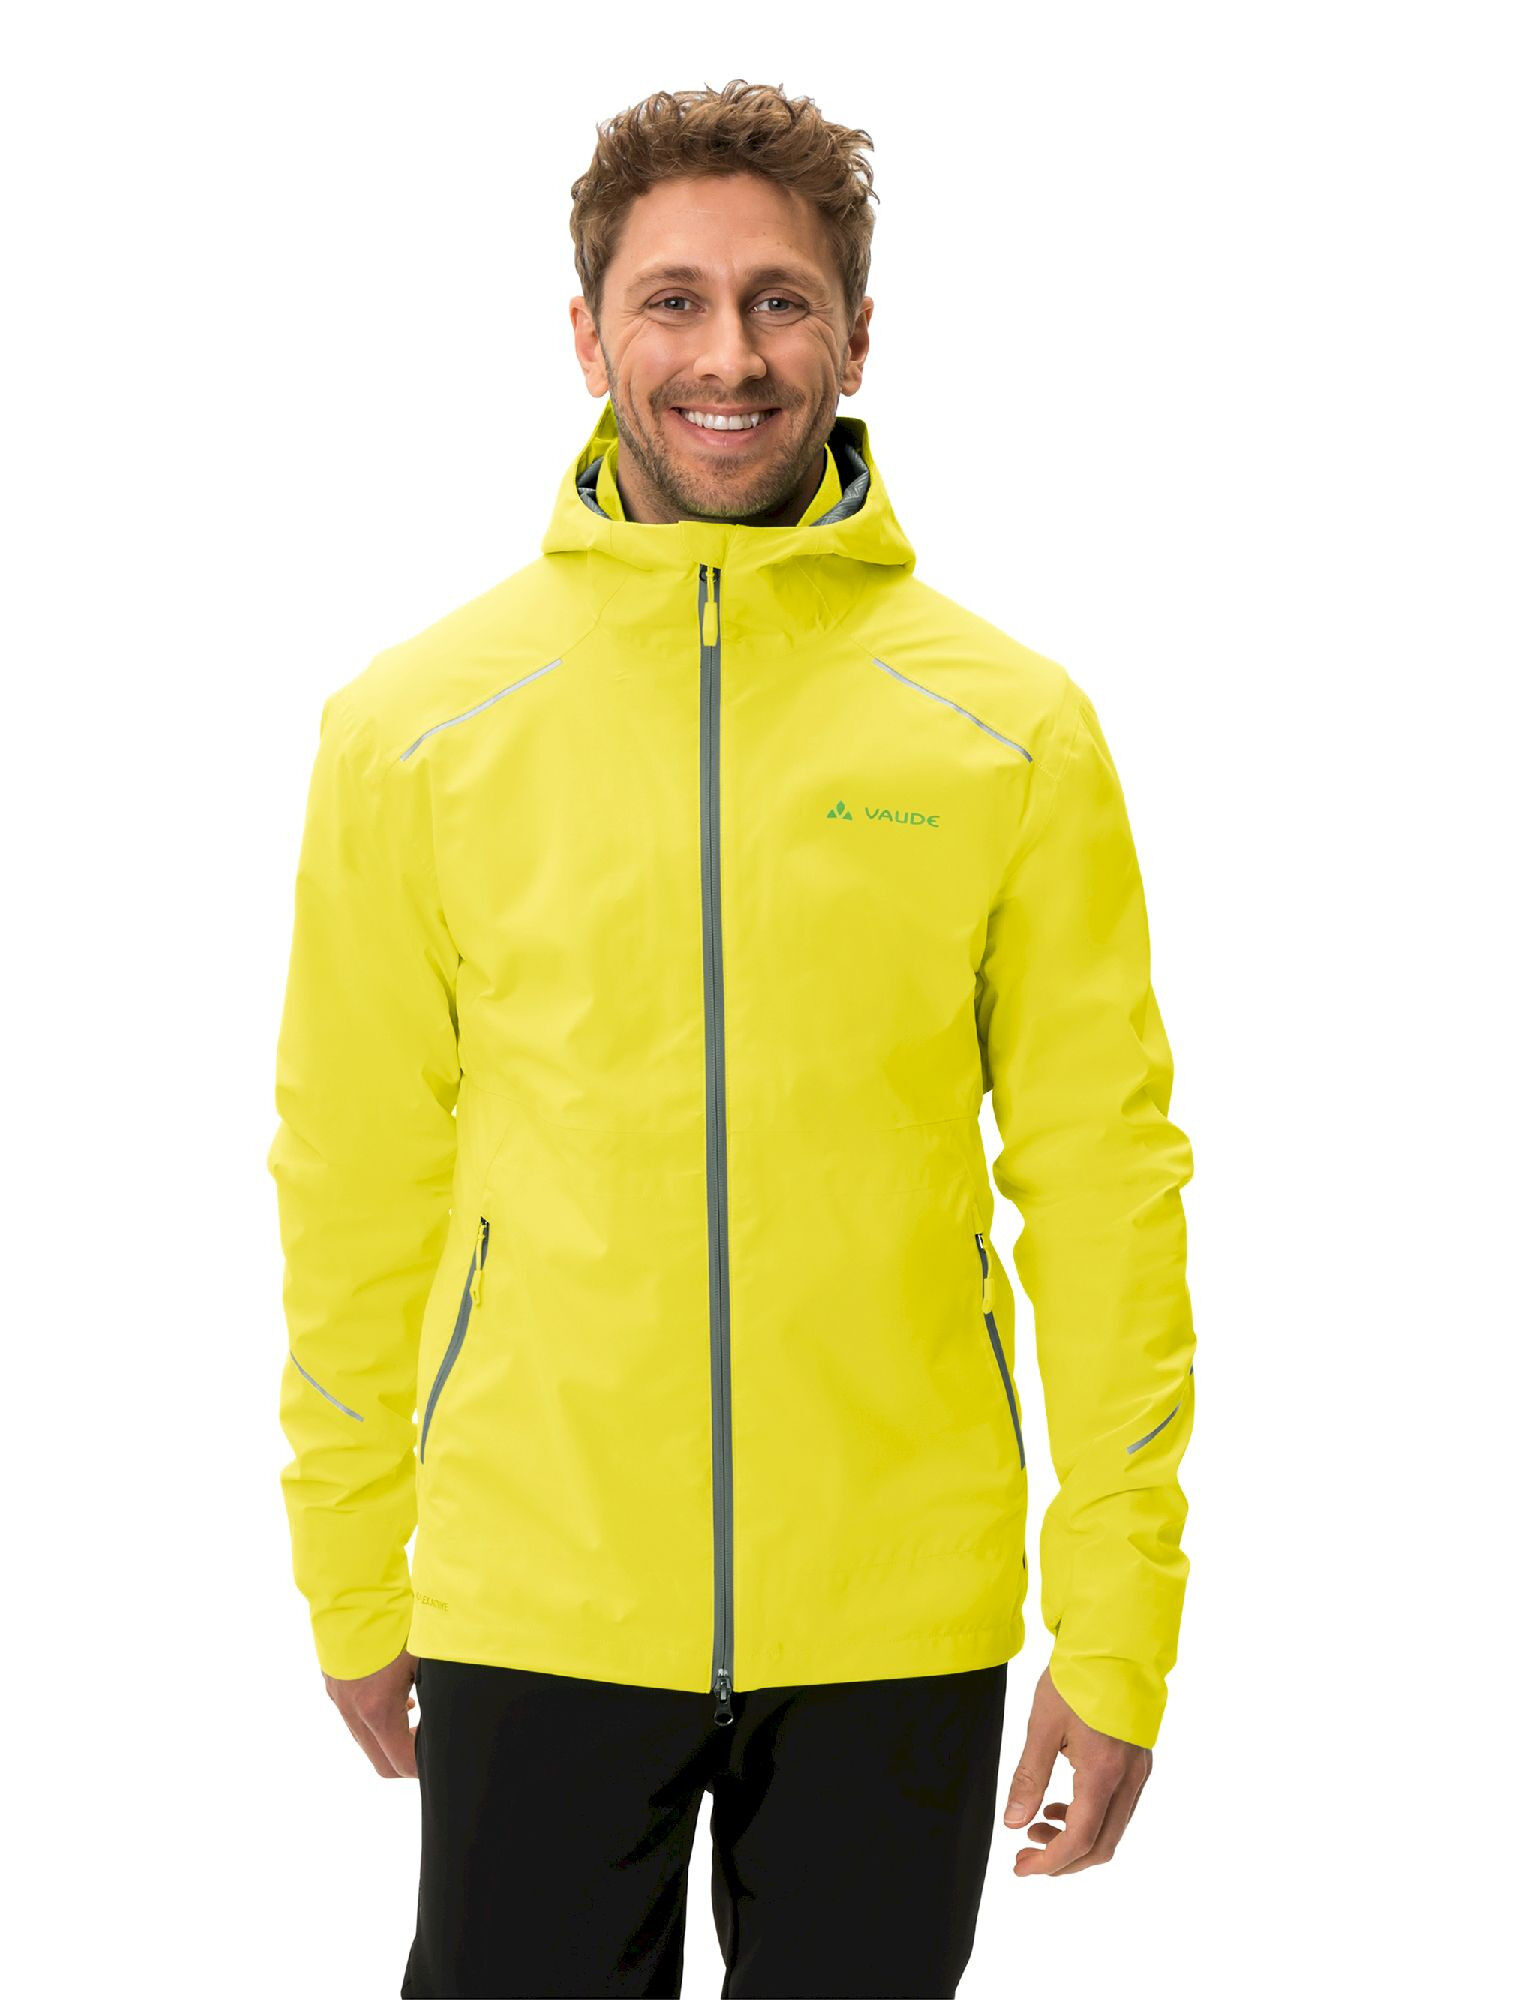 Vaude Yaras 3in1 Jacket - Cycling jacket - Men's